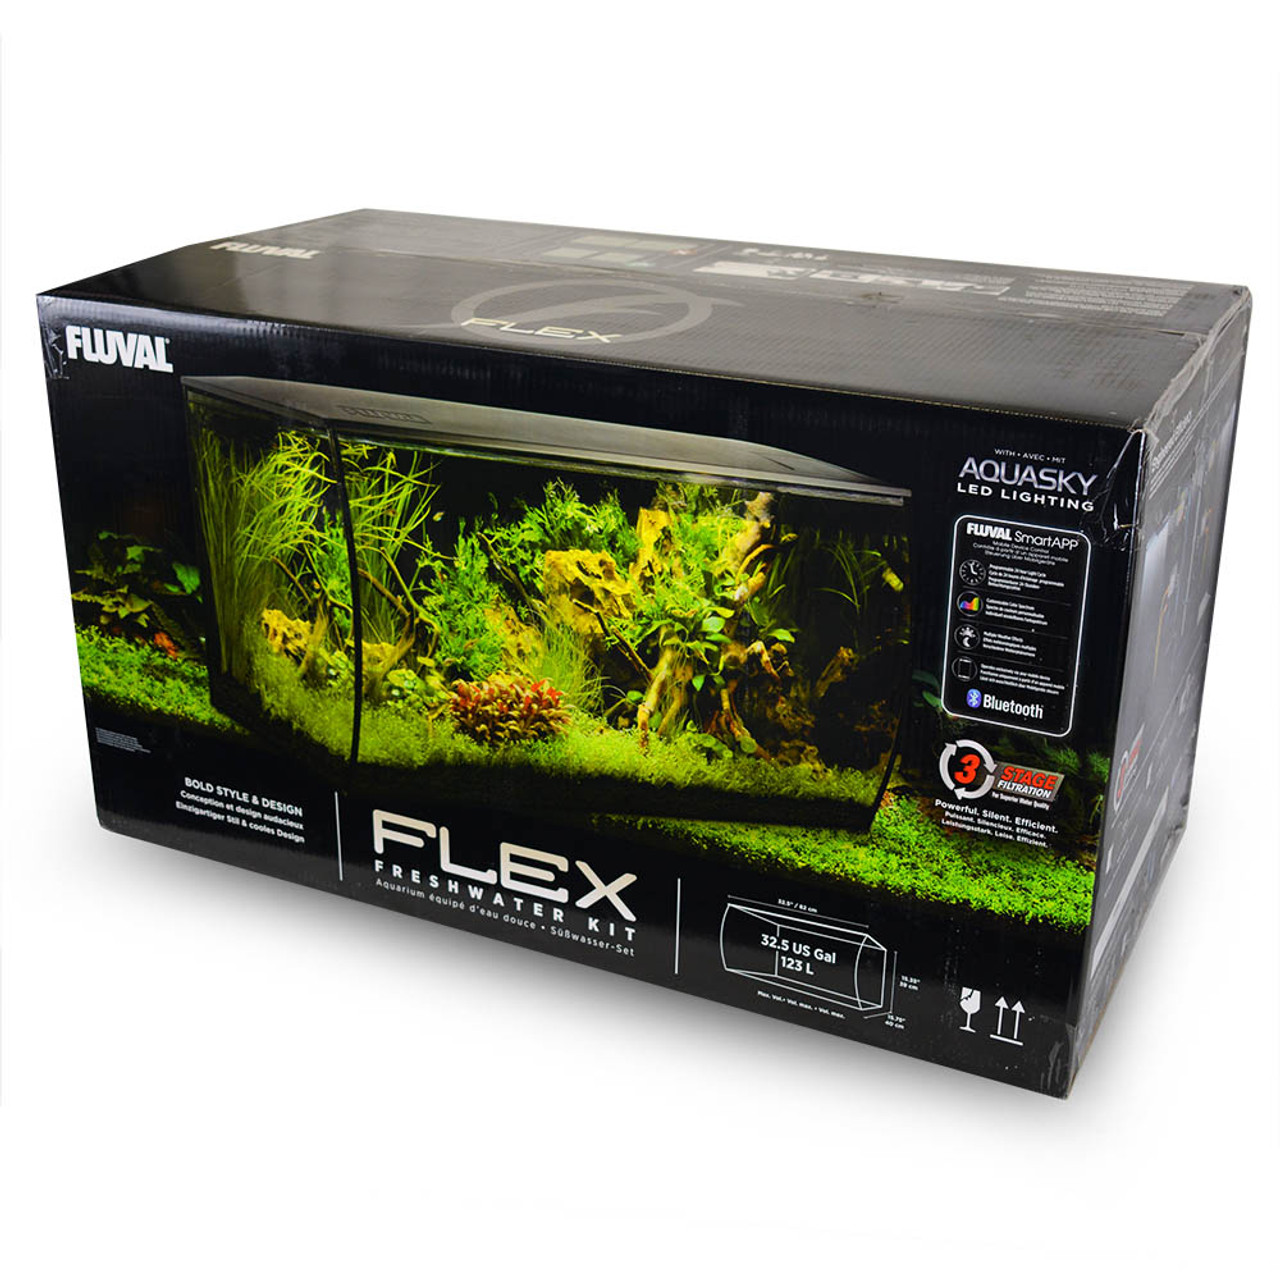 FLEX Aquarium Kit, 123 L (32.5 US Gal), Black - Fluval